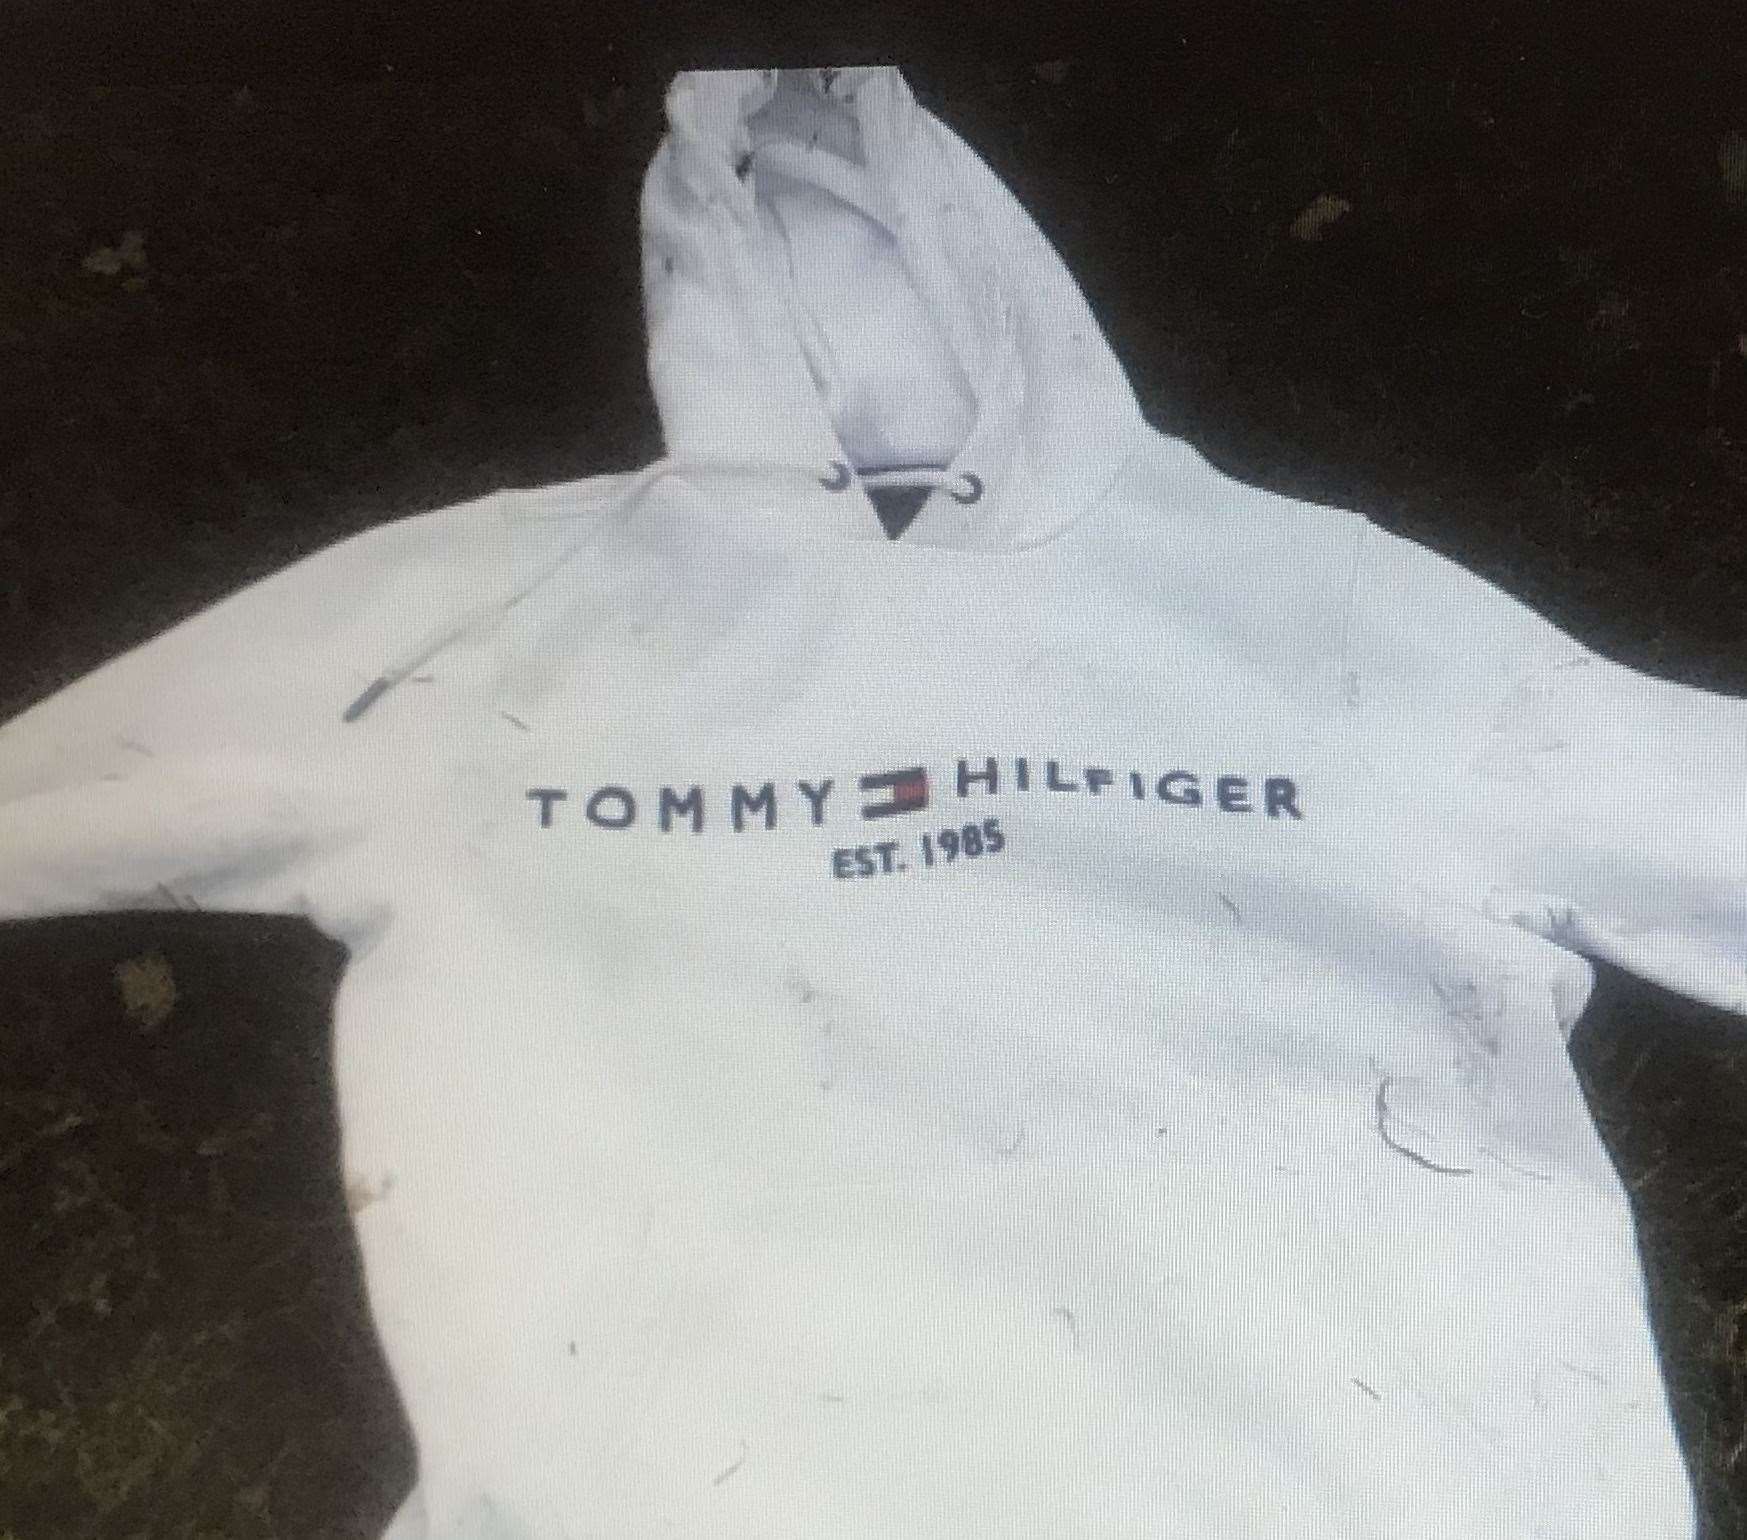 A hoodie dumped in the field